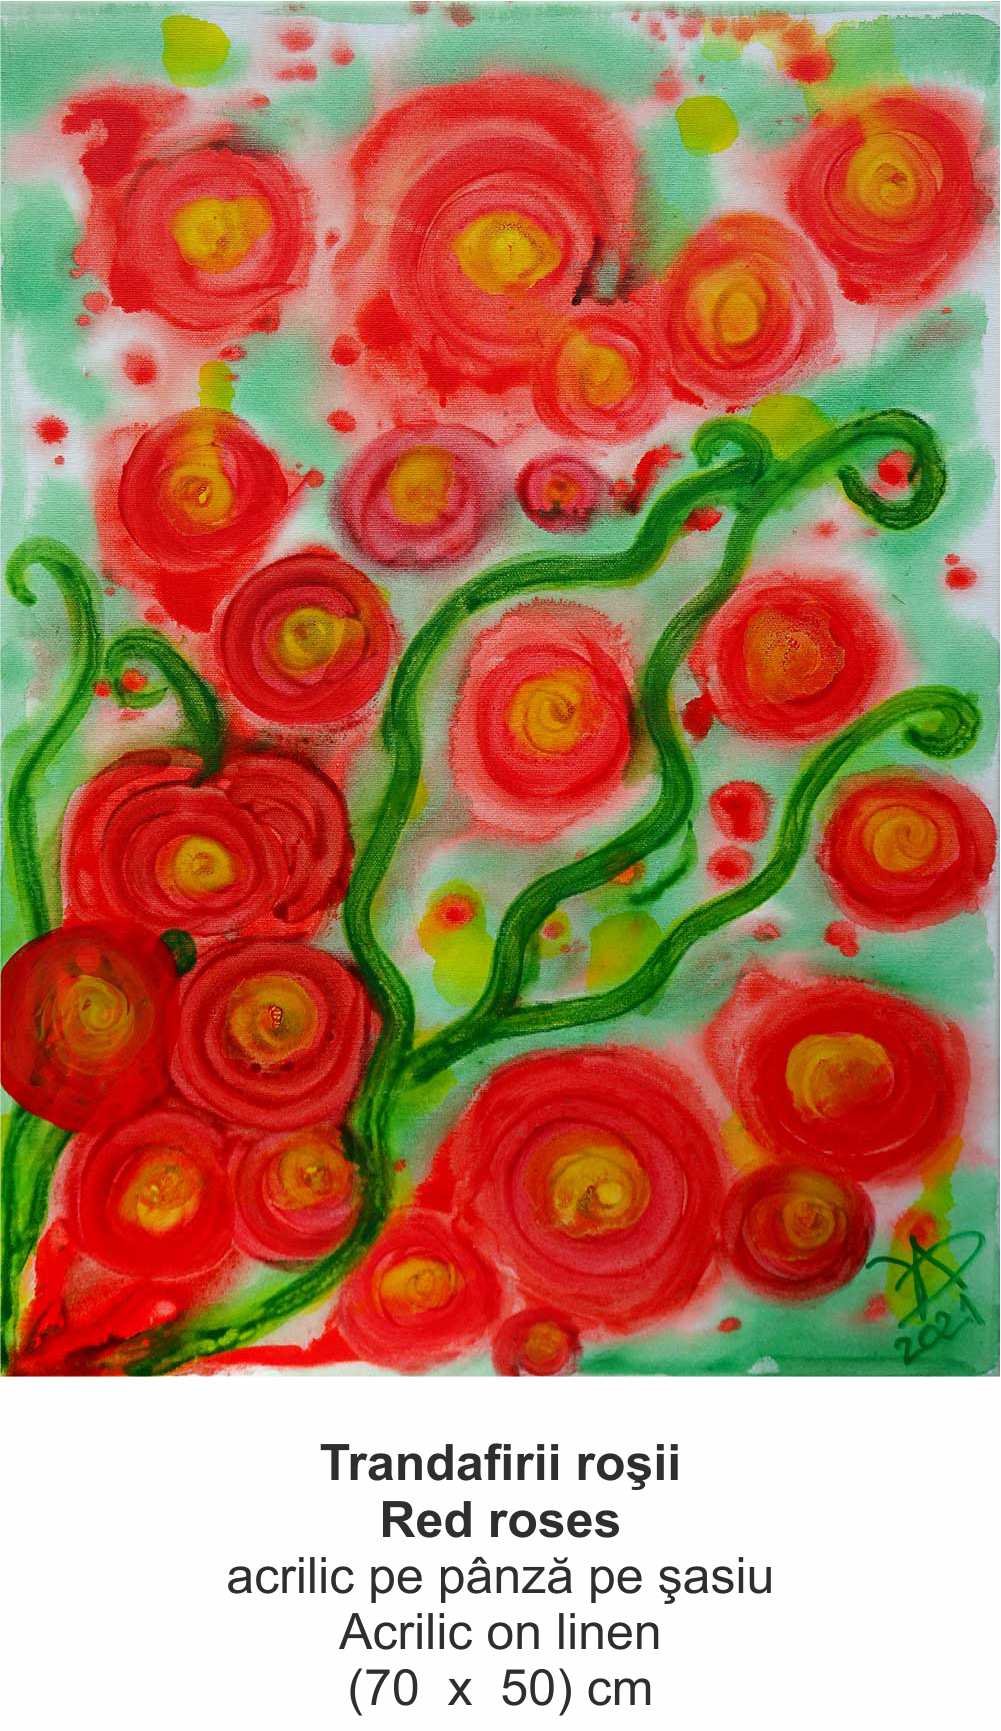 „Trandafirii roşii” („Red roses ”) - acrilic pe pânză pe şasiu (Acrilic on linen) - (70  x  50) cm - img 26